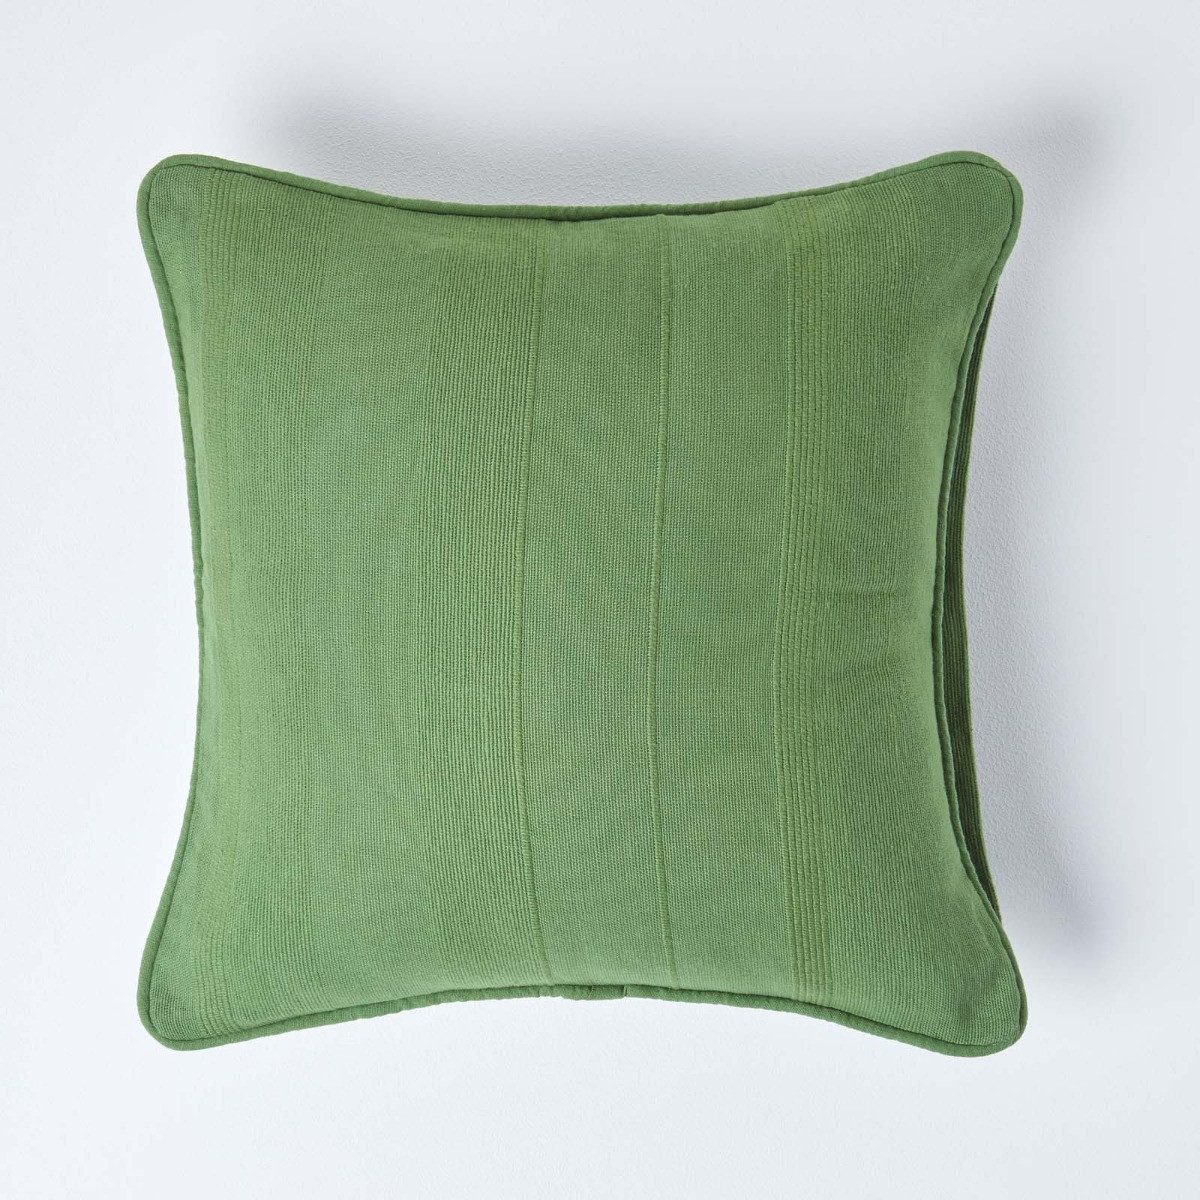 Kissenhülle Kissenbezug Rajput aus Baumwolle, olivgrün, 45 x 45 cm, Homescapes